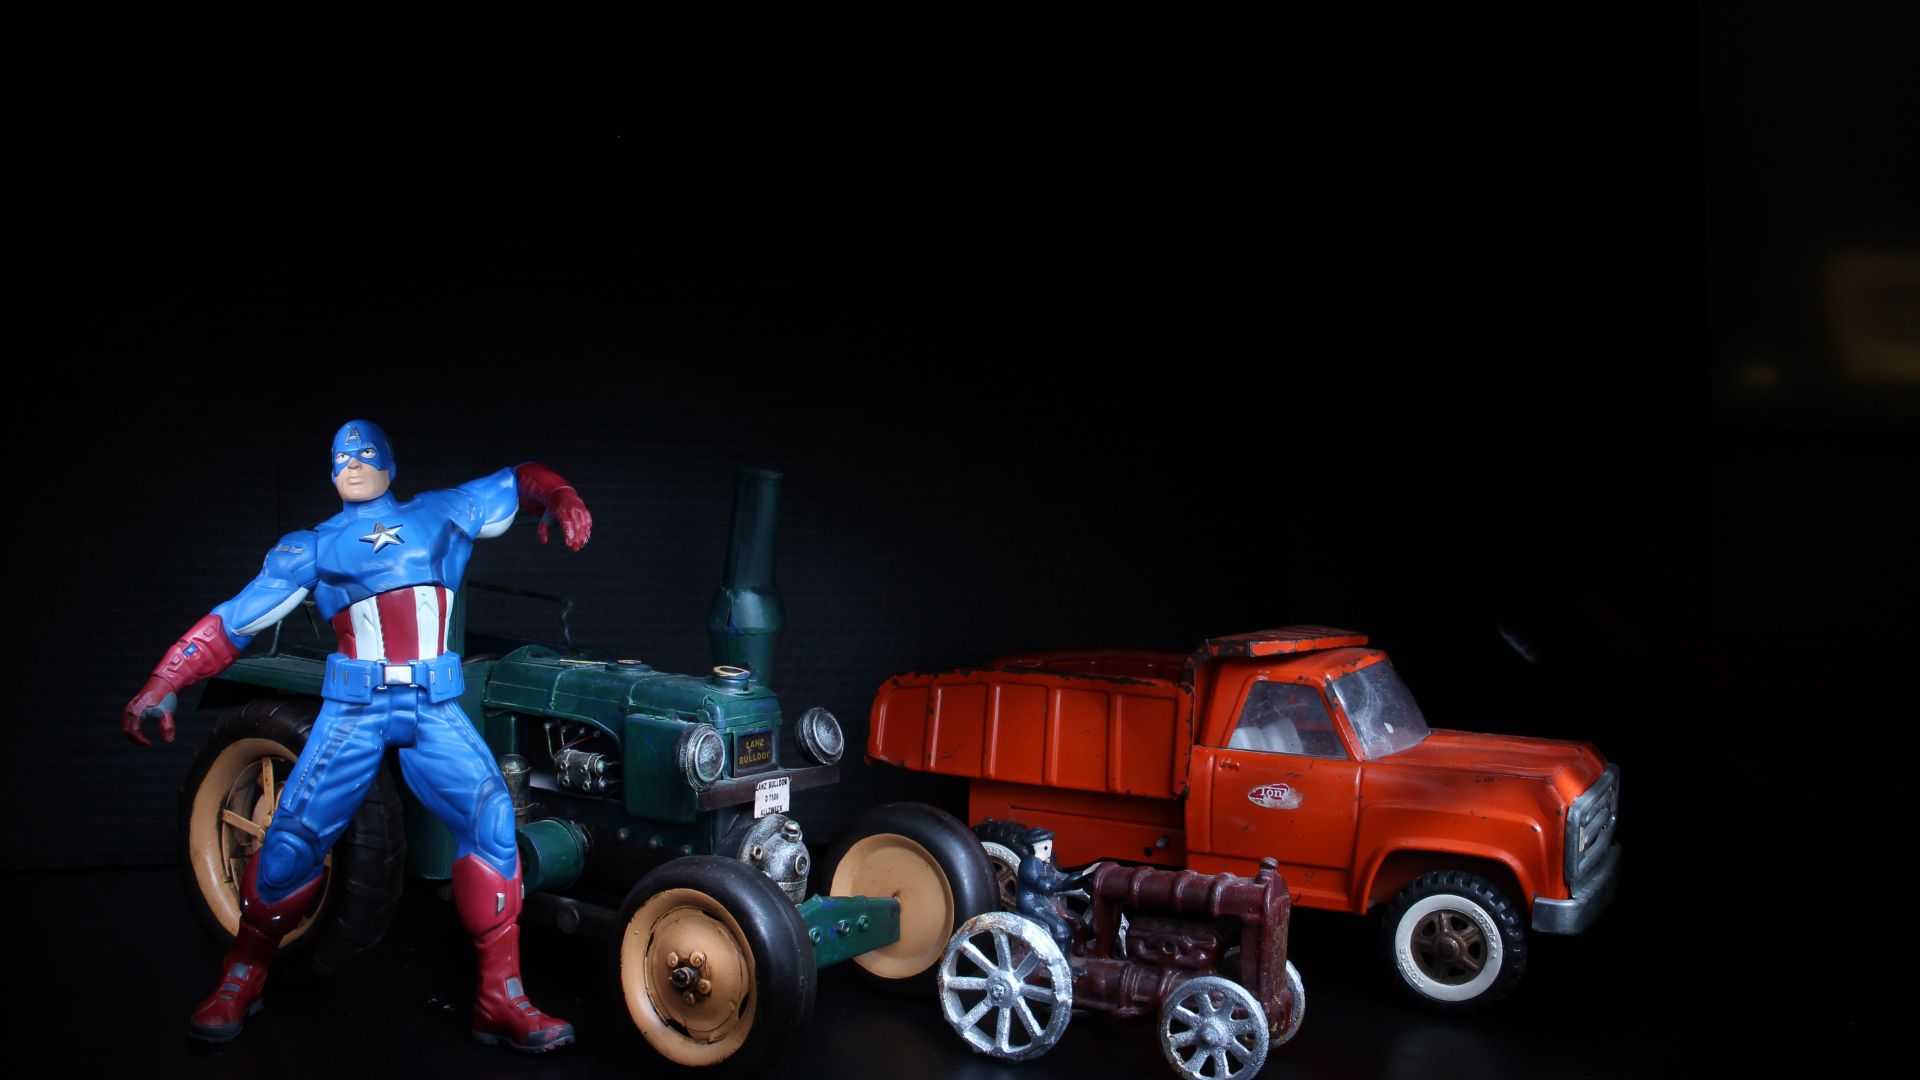 Wallpaper Captain America, toys, red truck